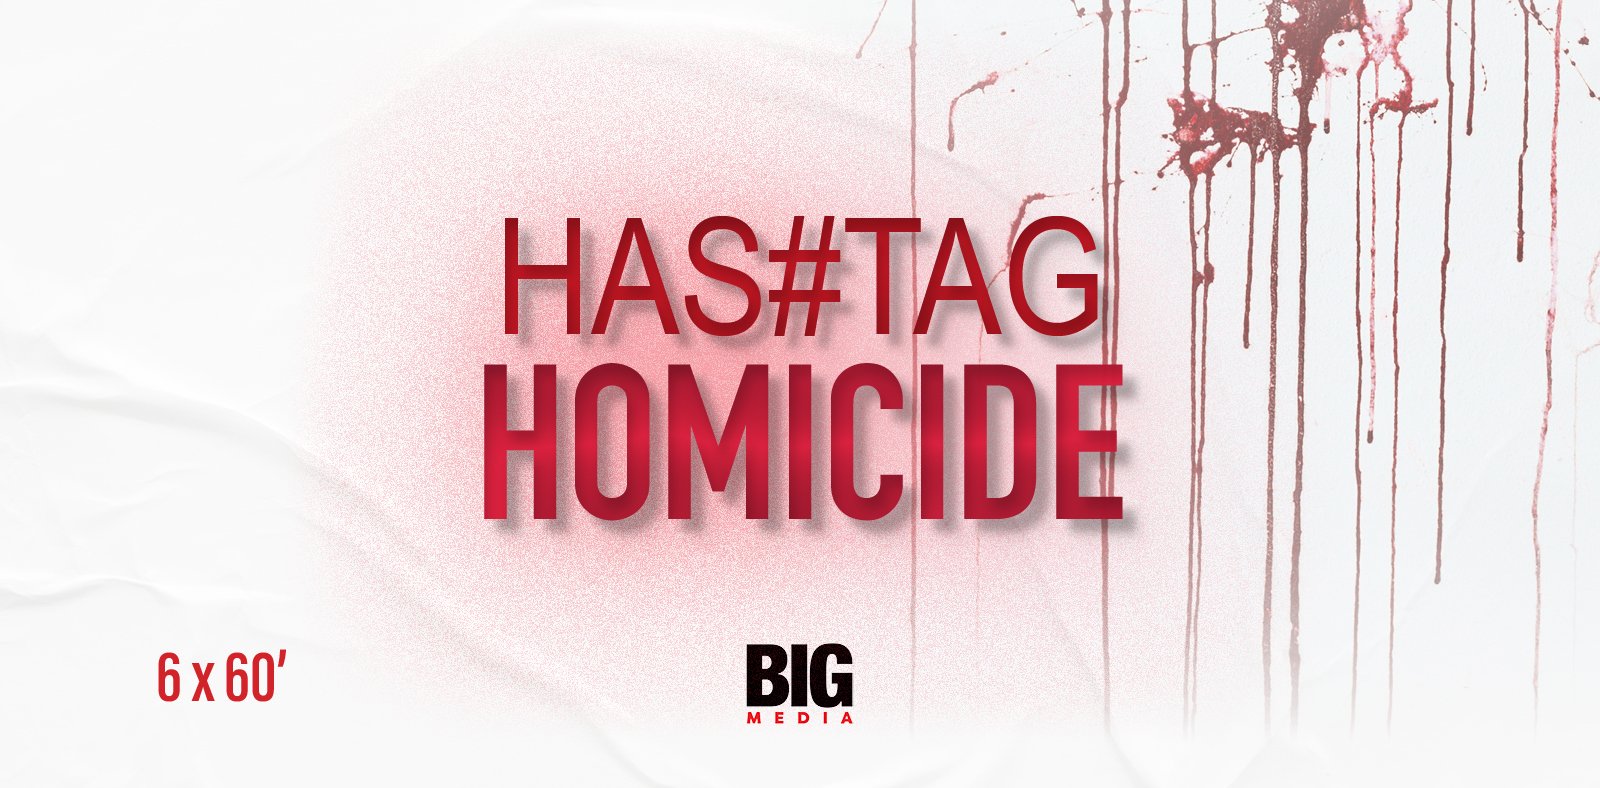 Hashtag_Homicide_Treatment_V3.jpg